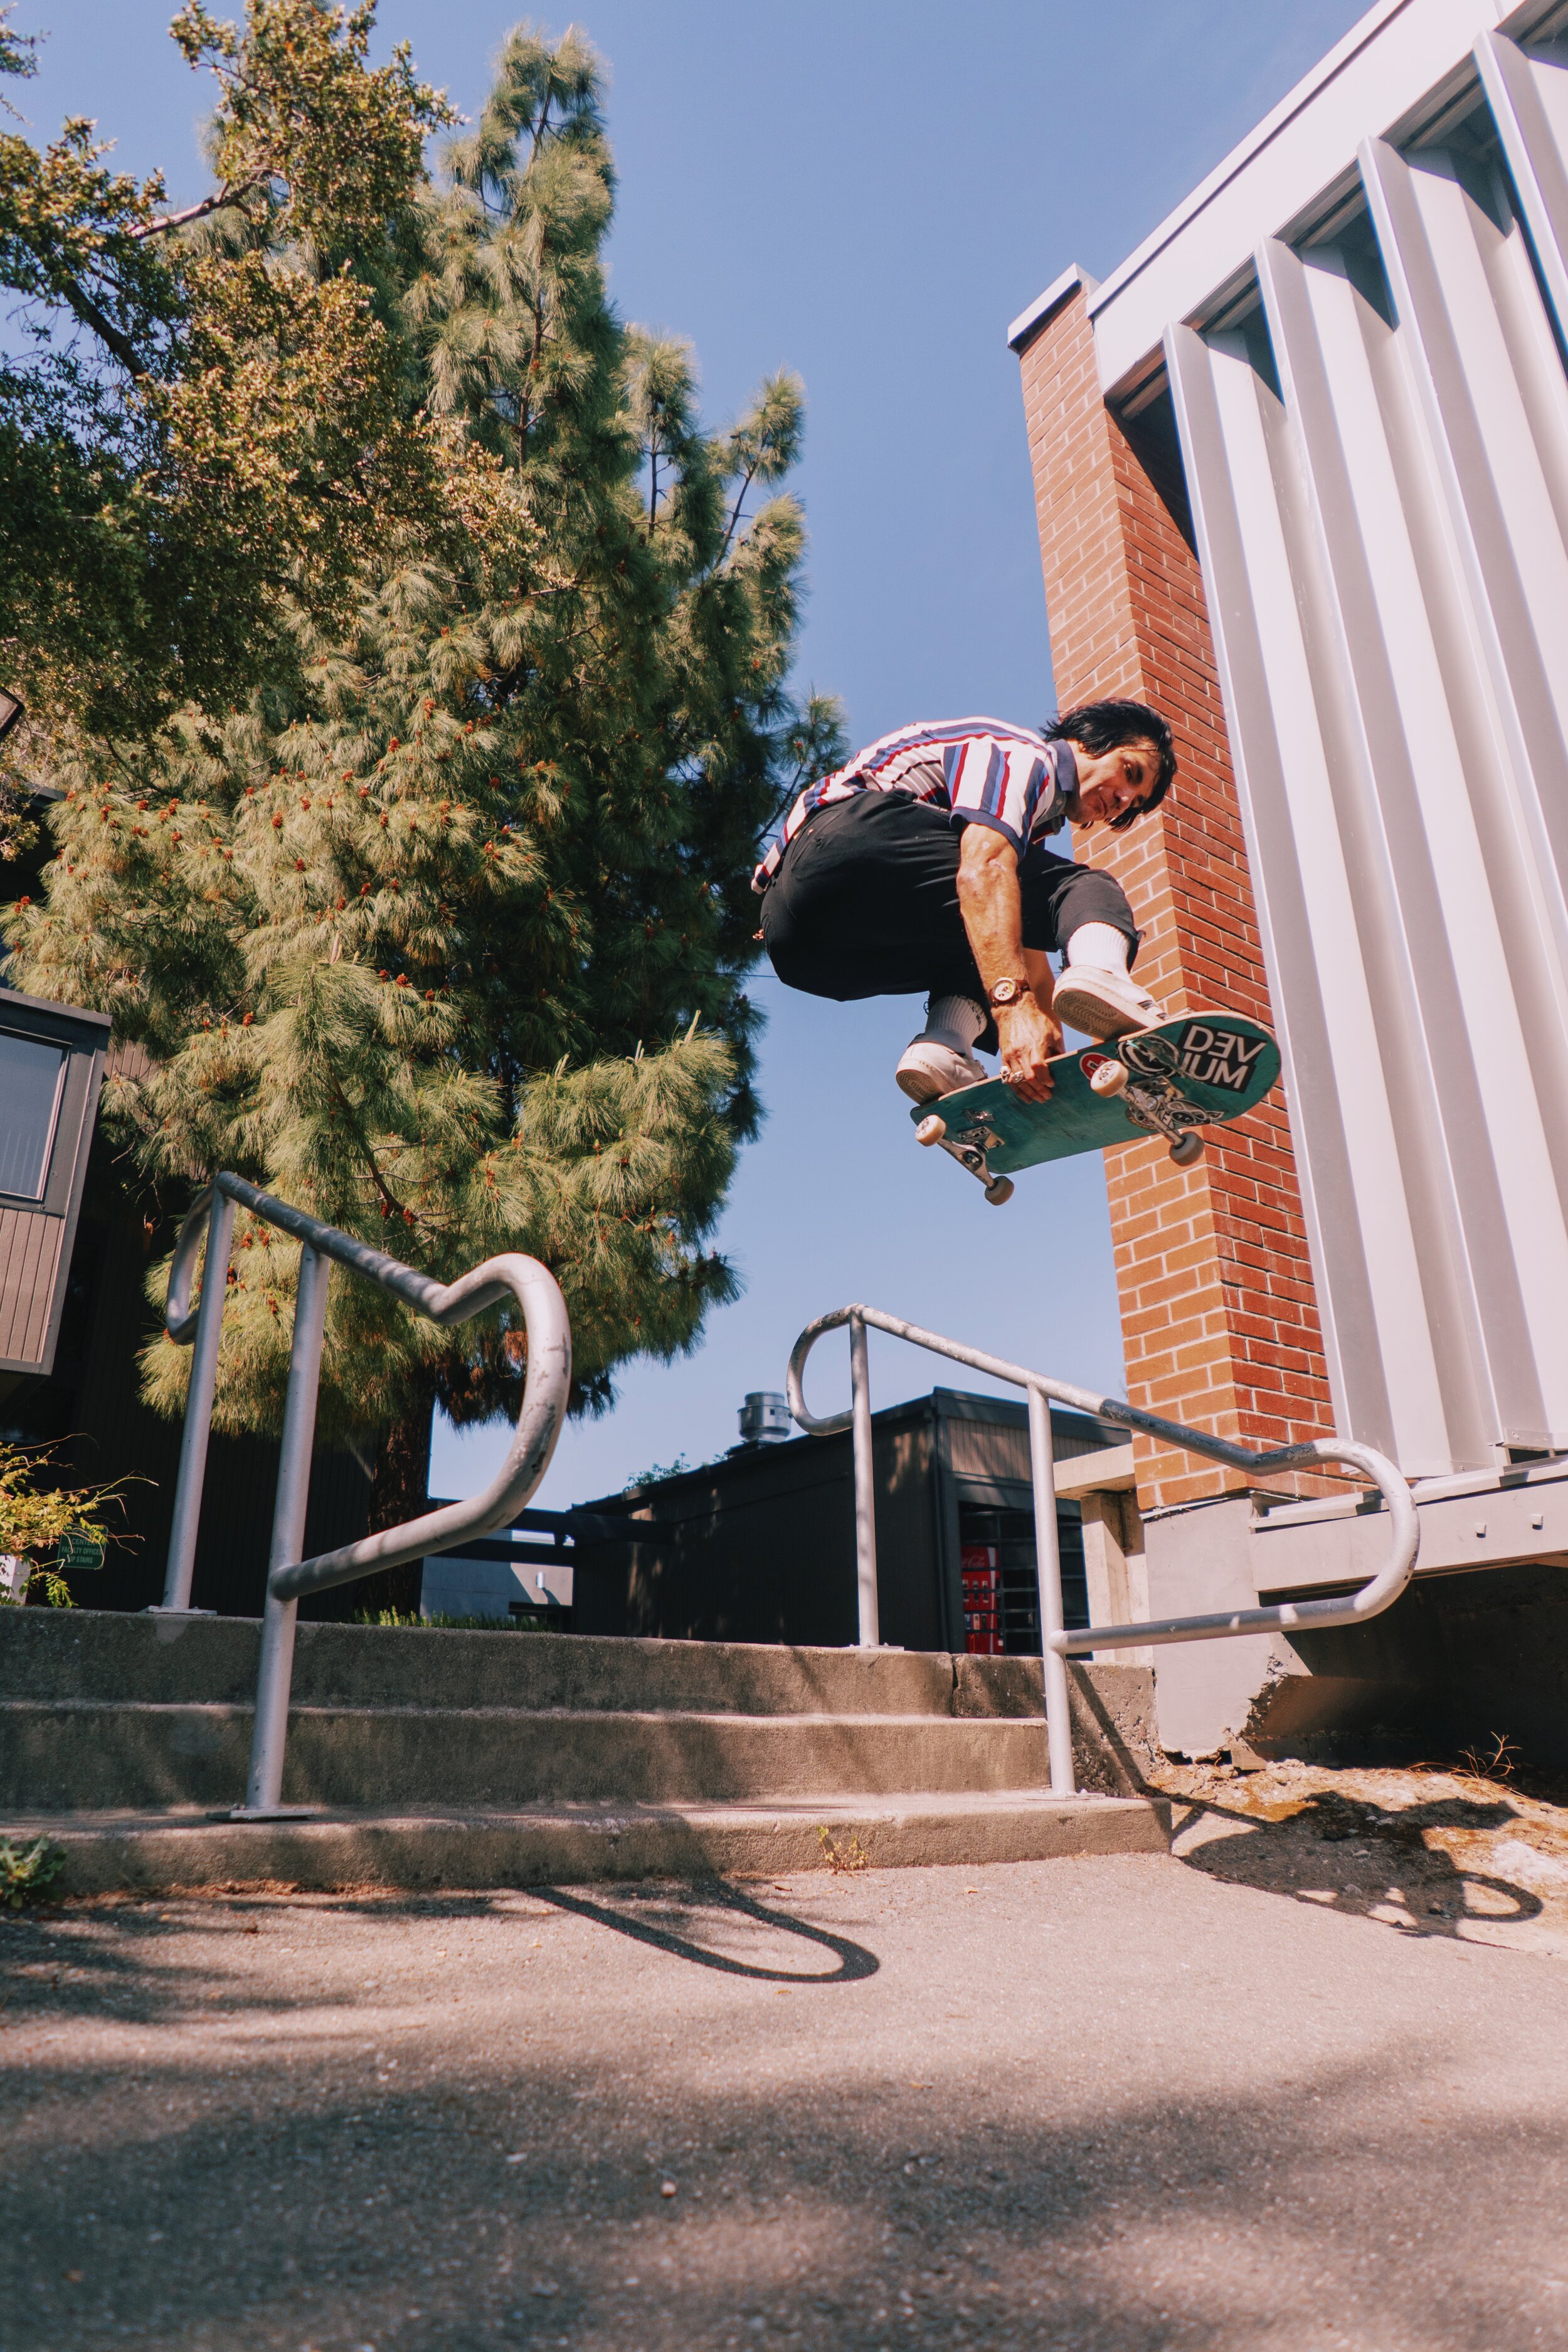  Corey Duffel for Skateism - Willow Creek, CA 